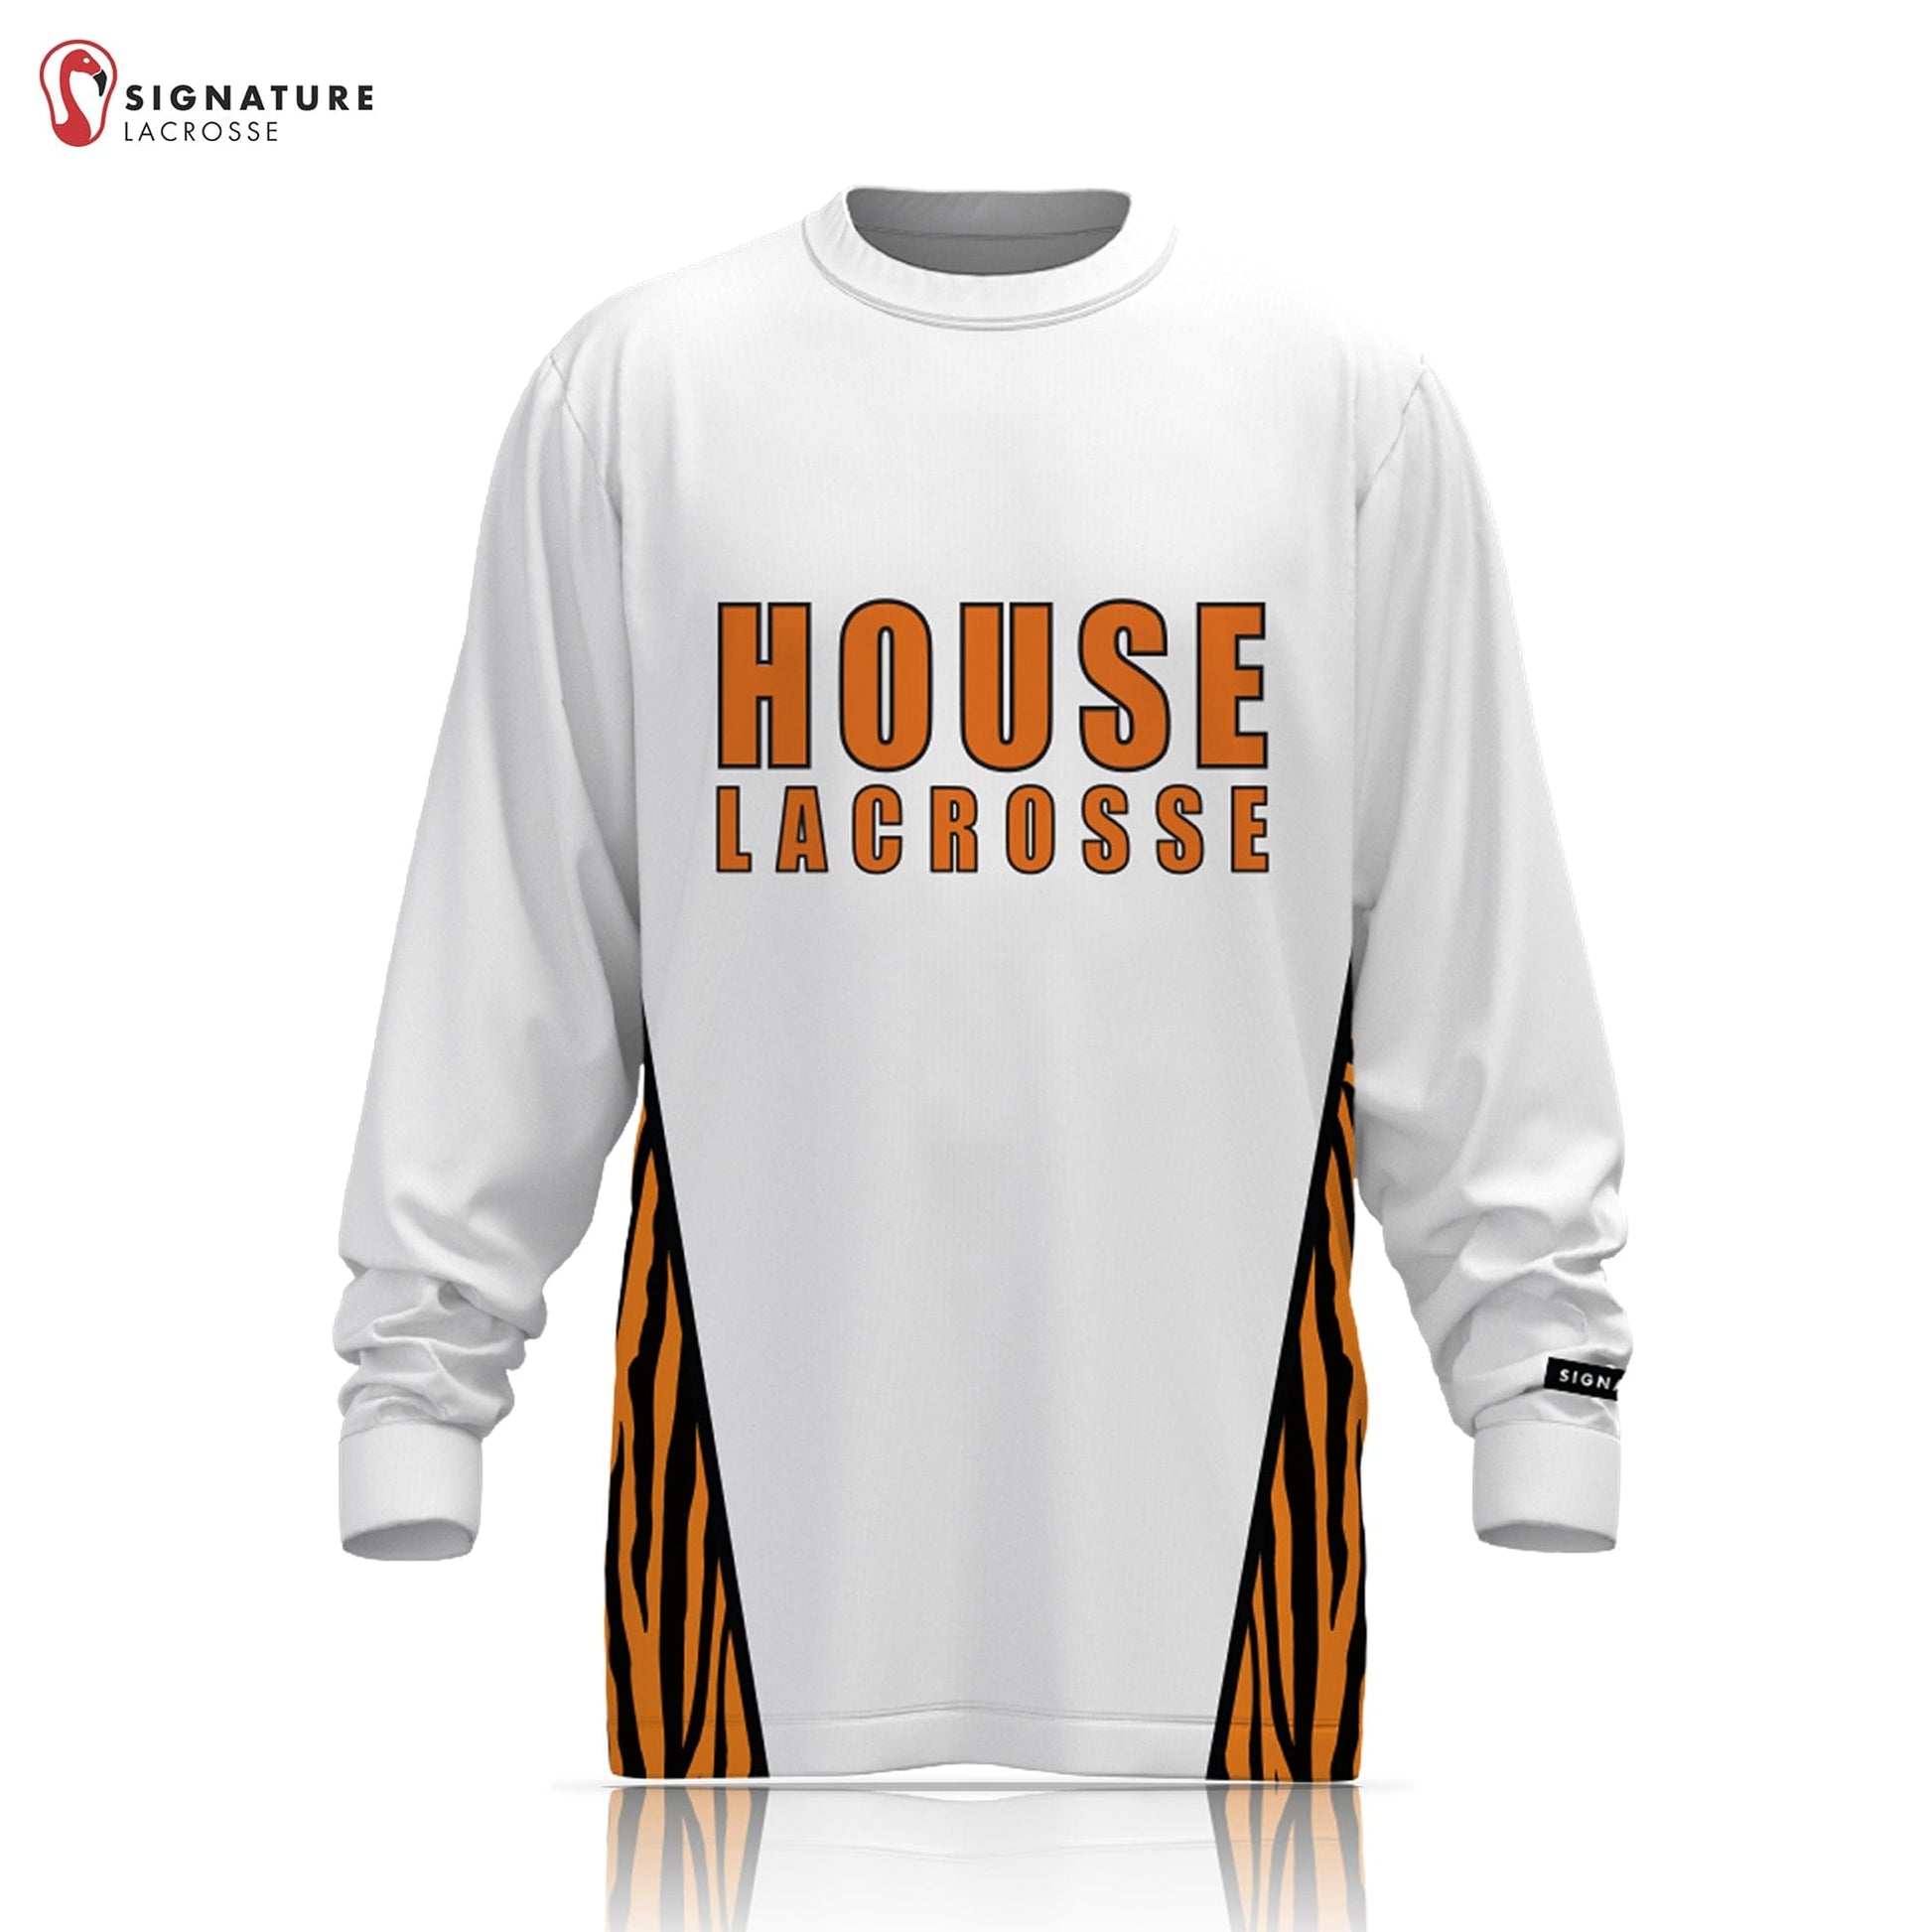 House of Sports Girls Lacrosse Pro Long Sleeve Shooting Shirt Signature Lacrosse